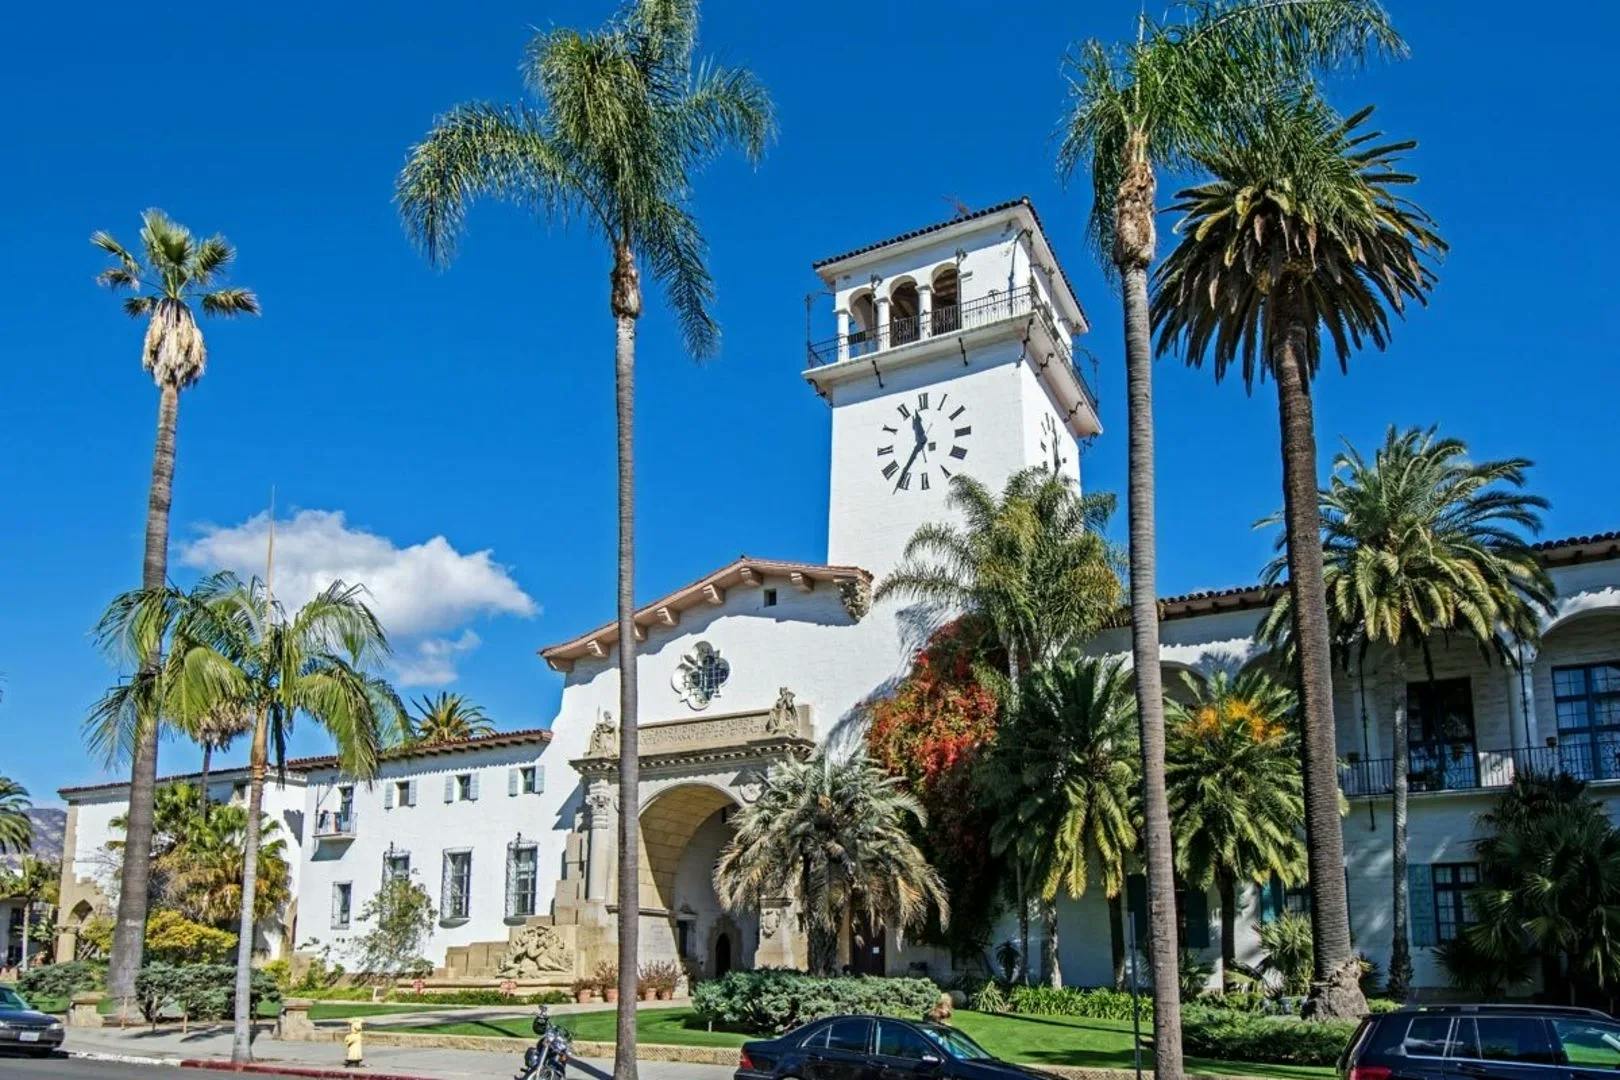 Image of the beautiful city of Santa Barbara